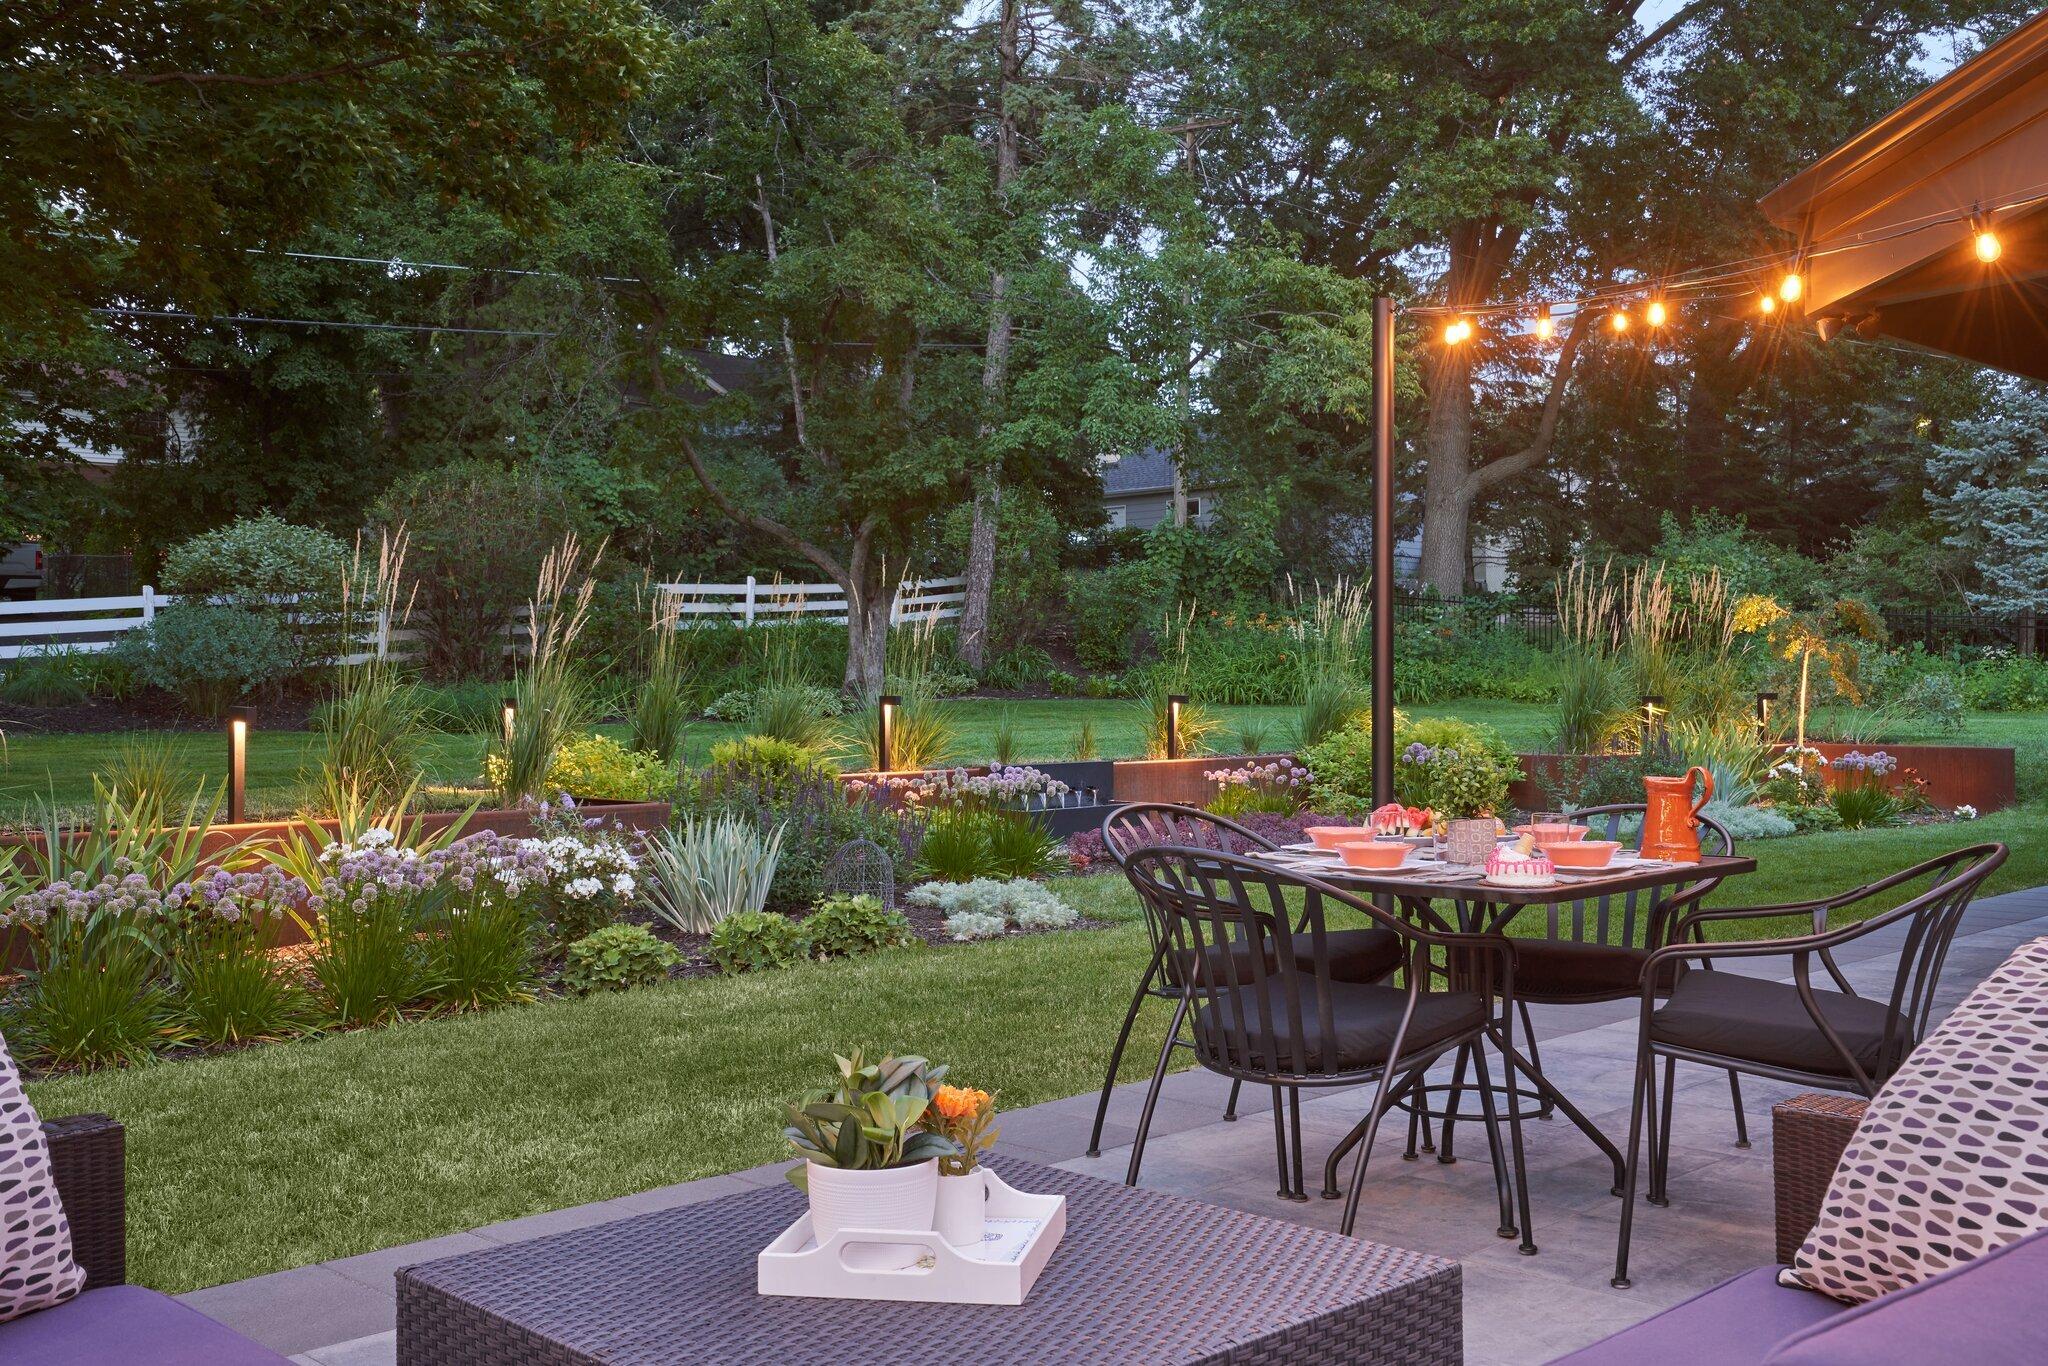 grey belgard modern patio with bistro lights overlooking colorful garden bed with modern lighting and corten steel